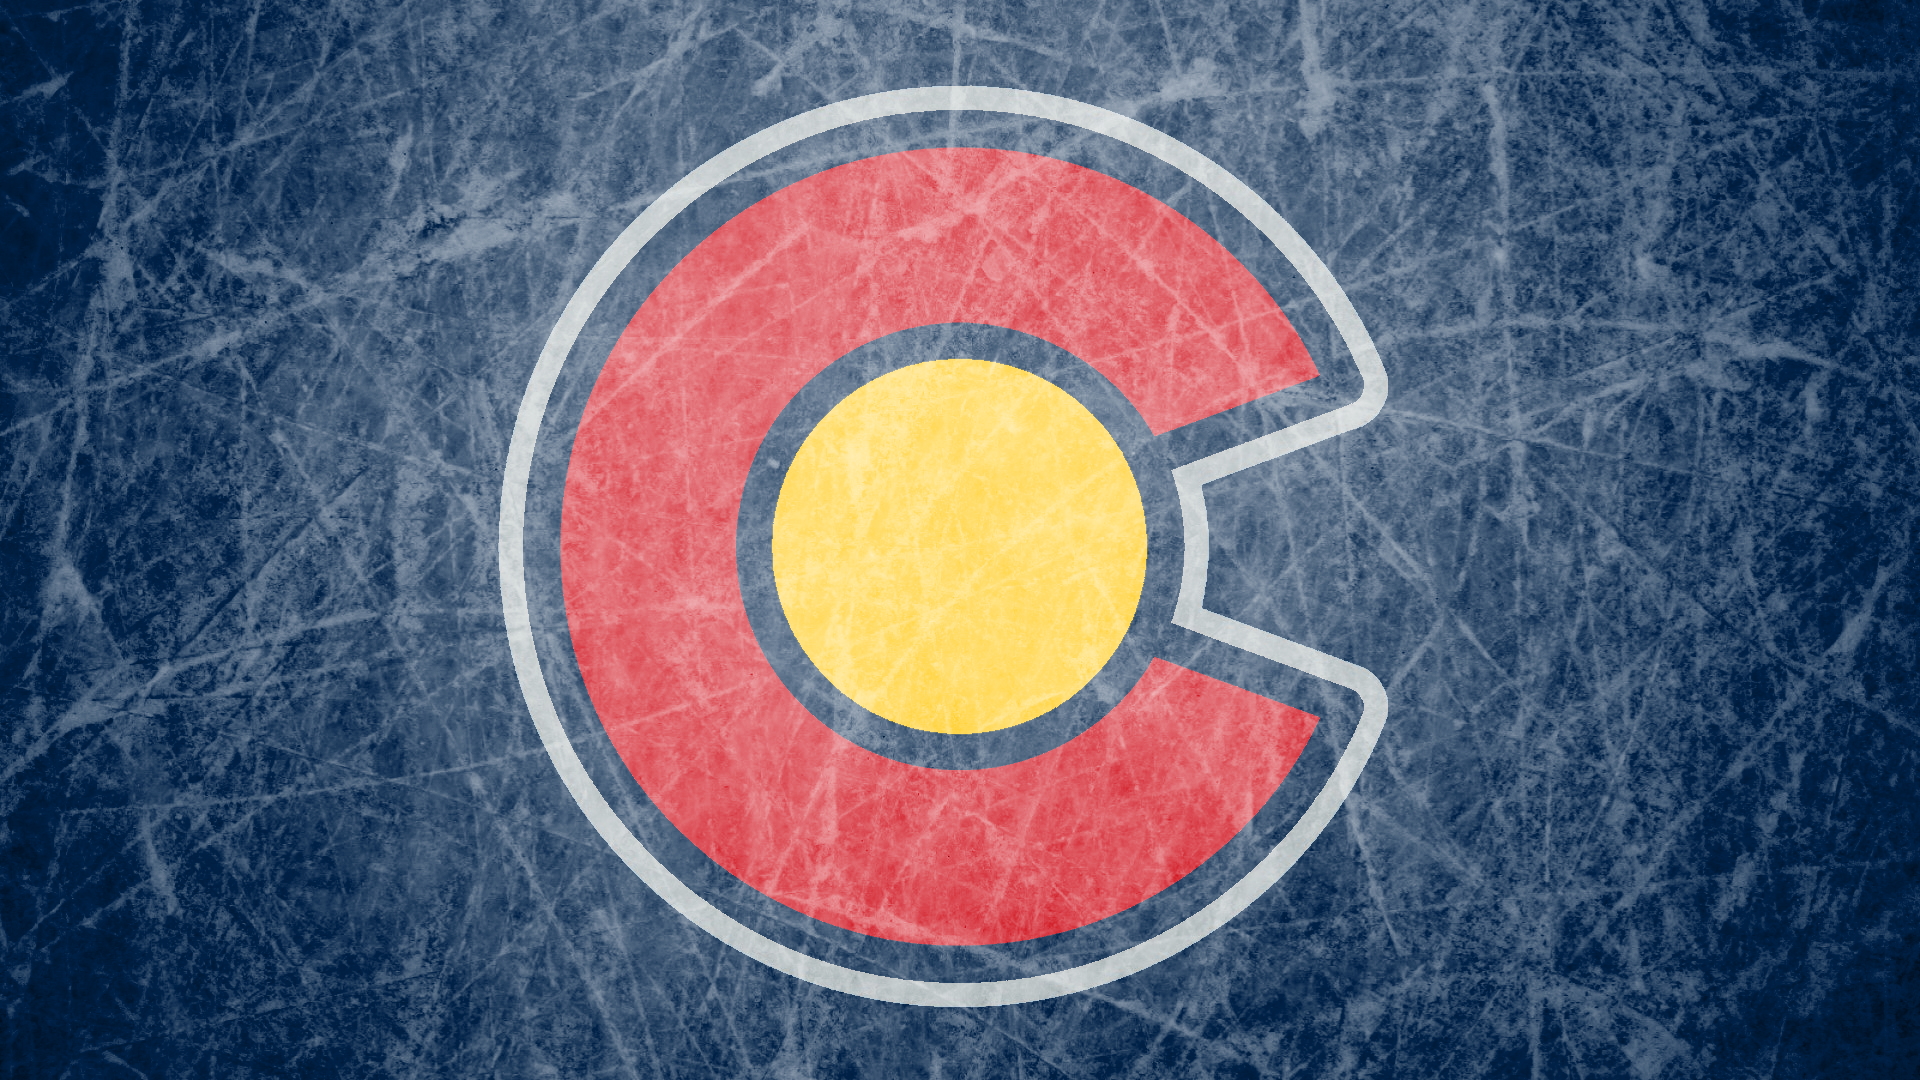 General 1920x1080 Colorado Avalanche NHL Reverse Retro Hockey ice hockey logo minimalism simple background